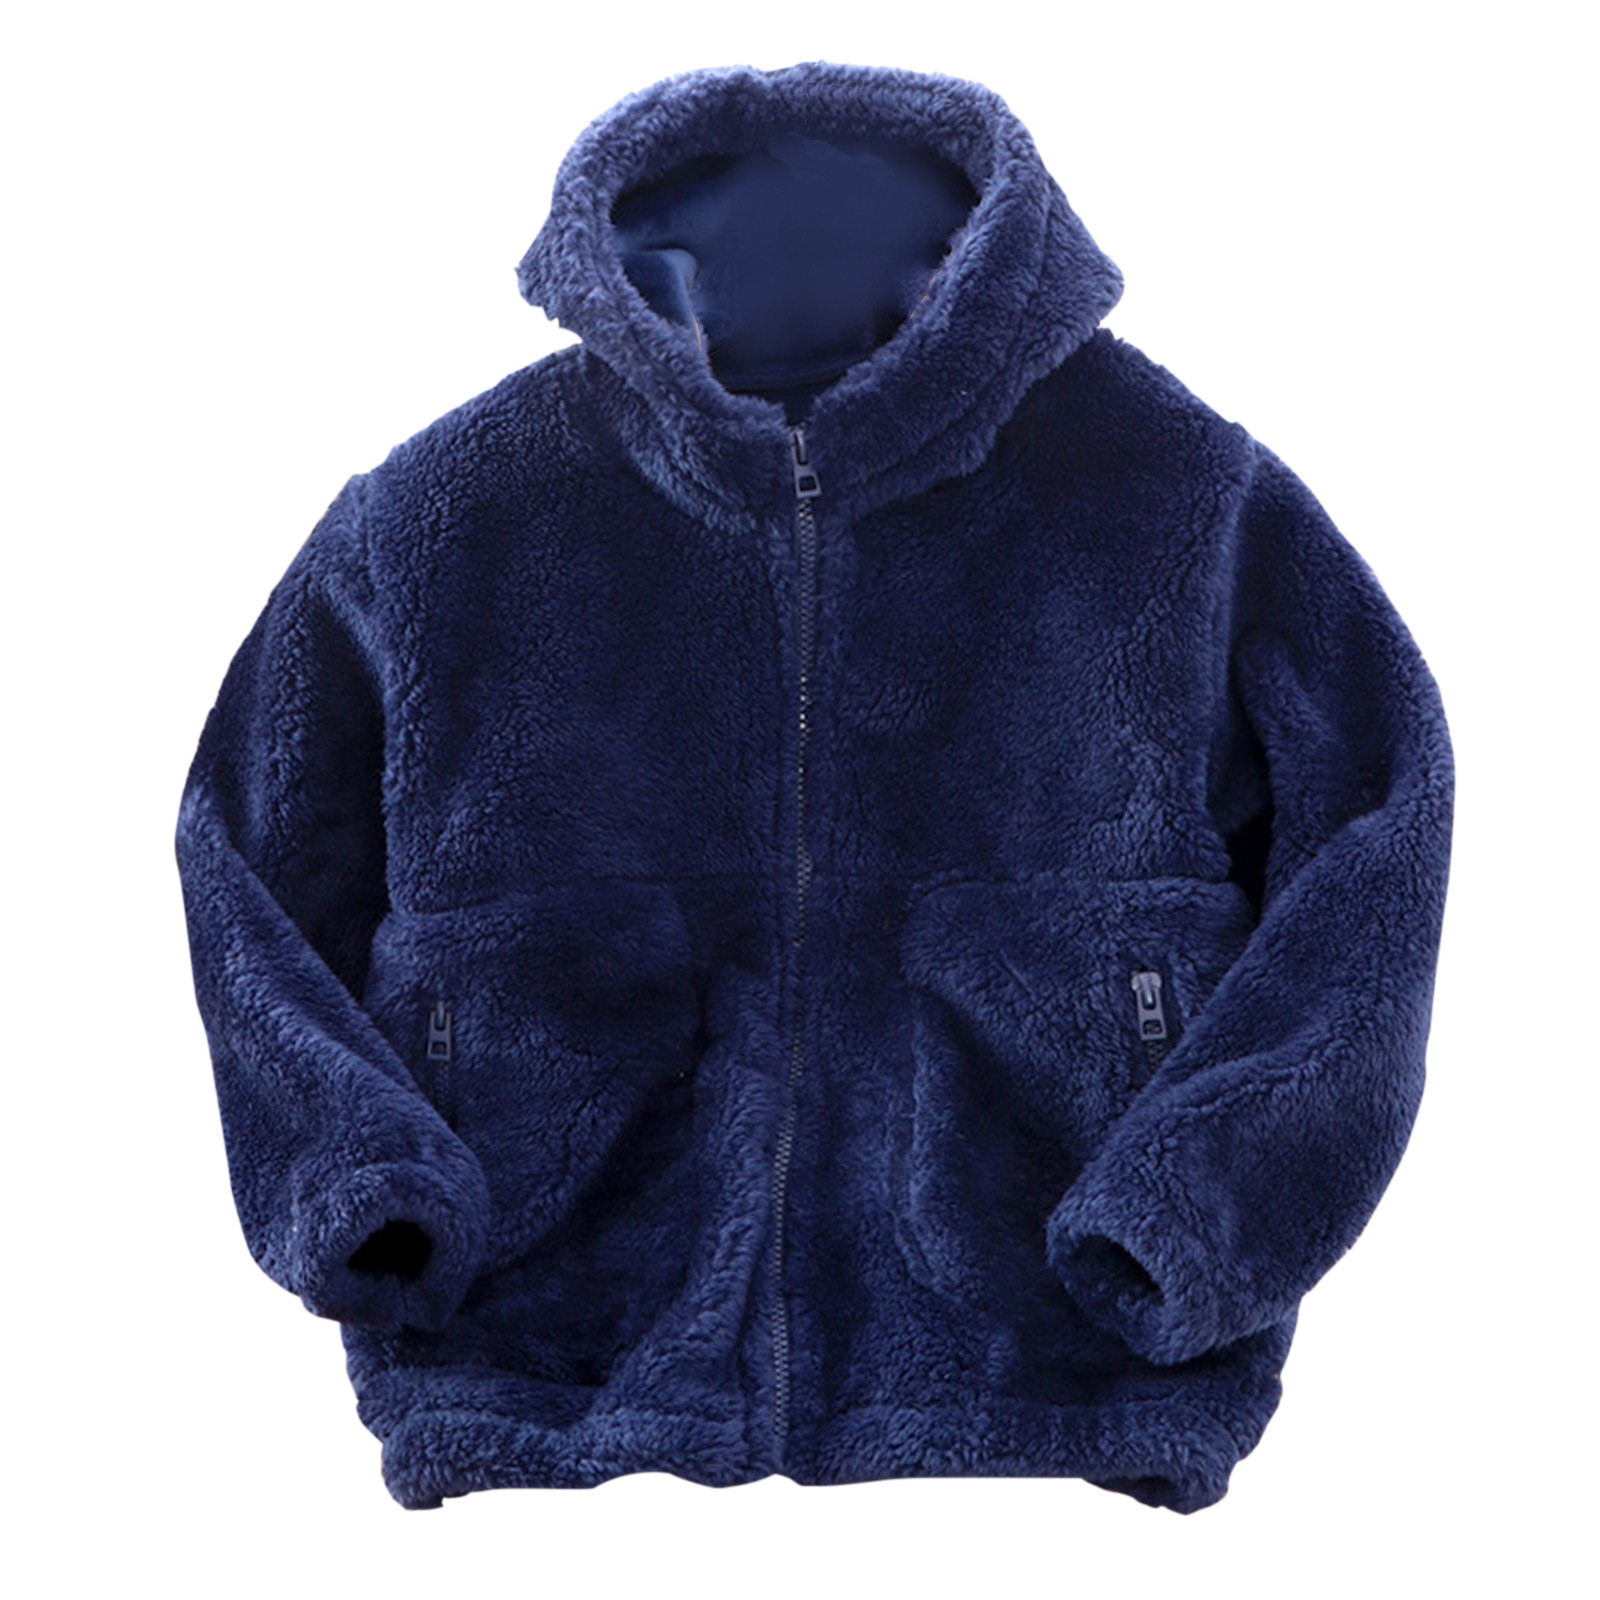 adviicd Boys' Outerwear Jackets & Coats Boys Winter Coats Size 14-16 ...